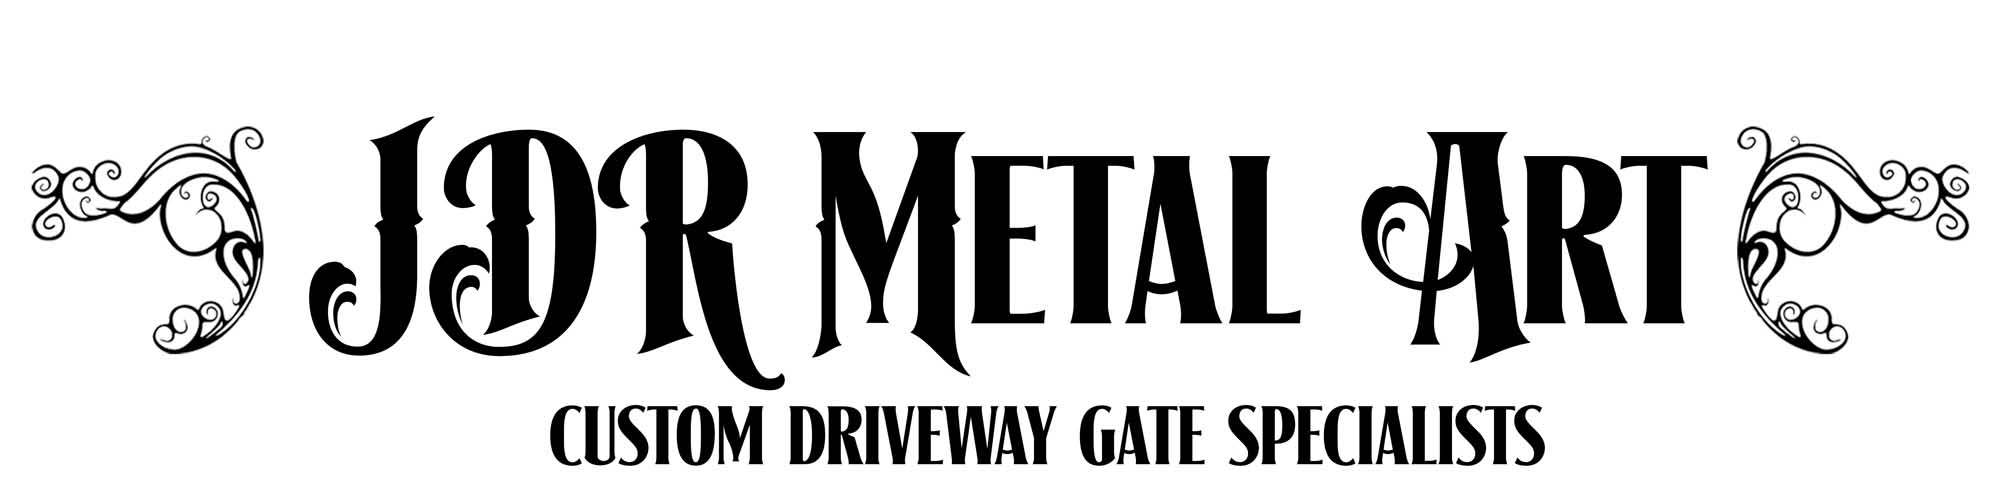 Custom driveway gates by JDR Metal Art logo.